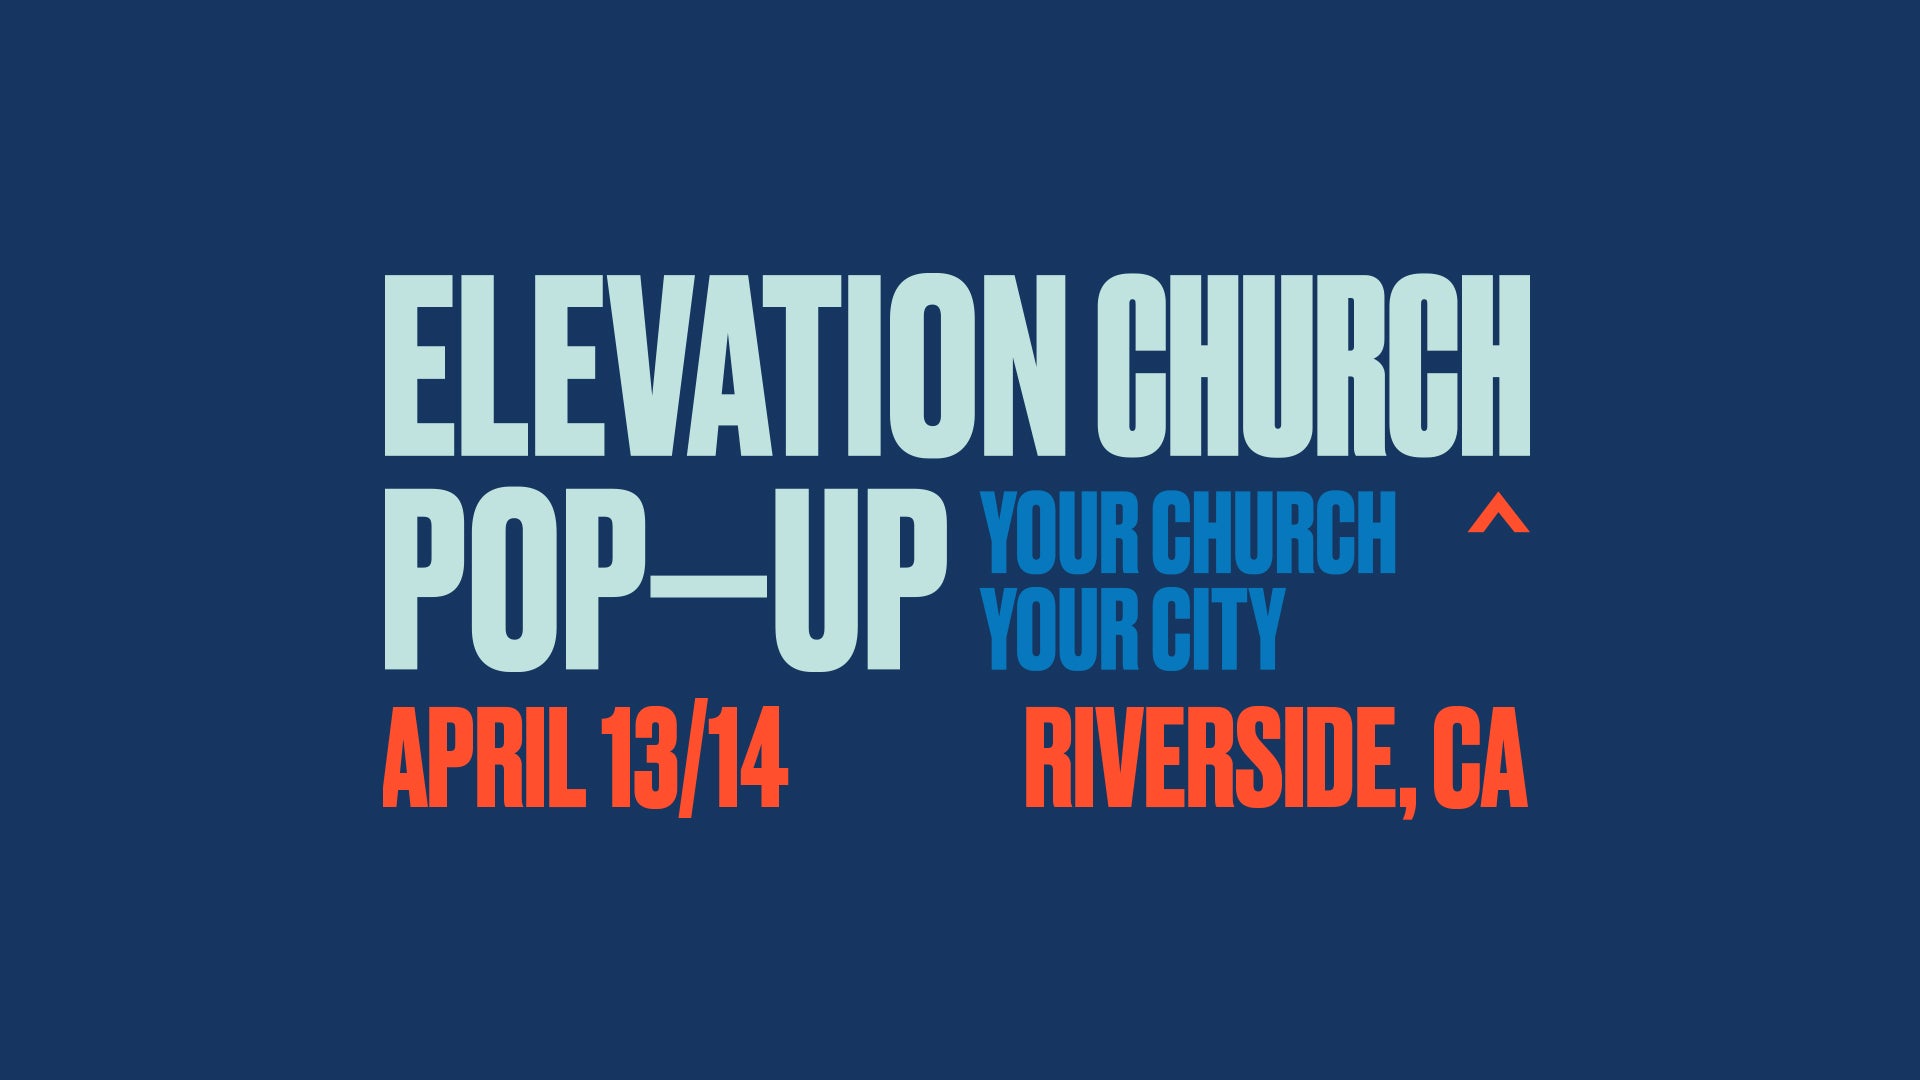 Elevation Church Pop-Up Riverside 14. April